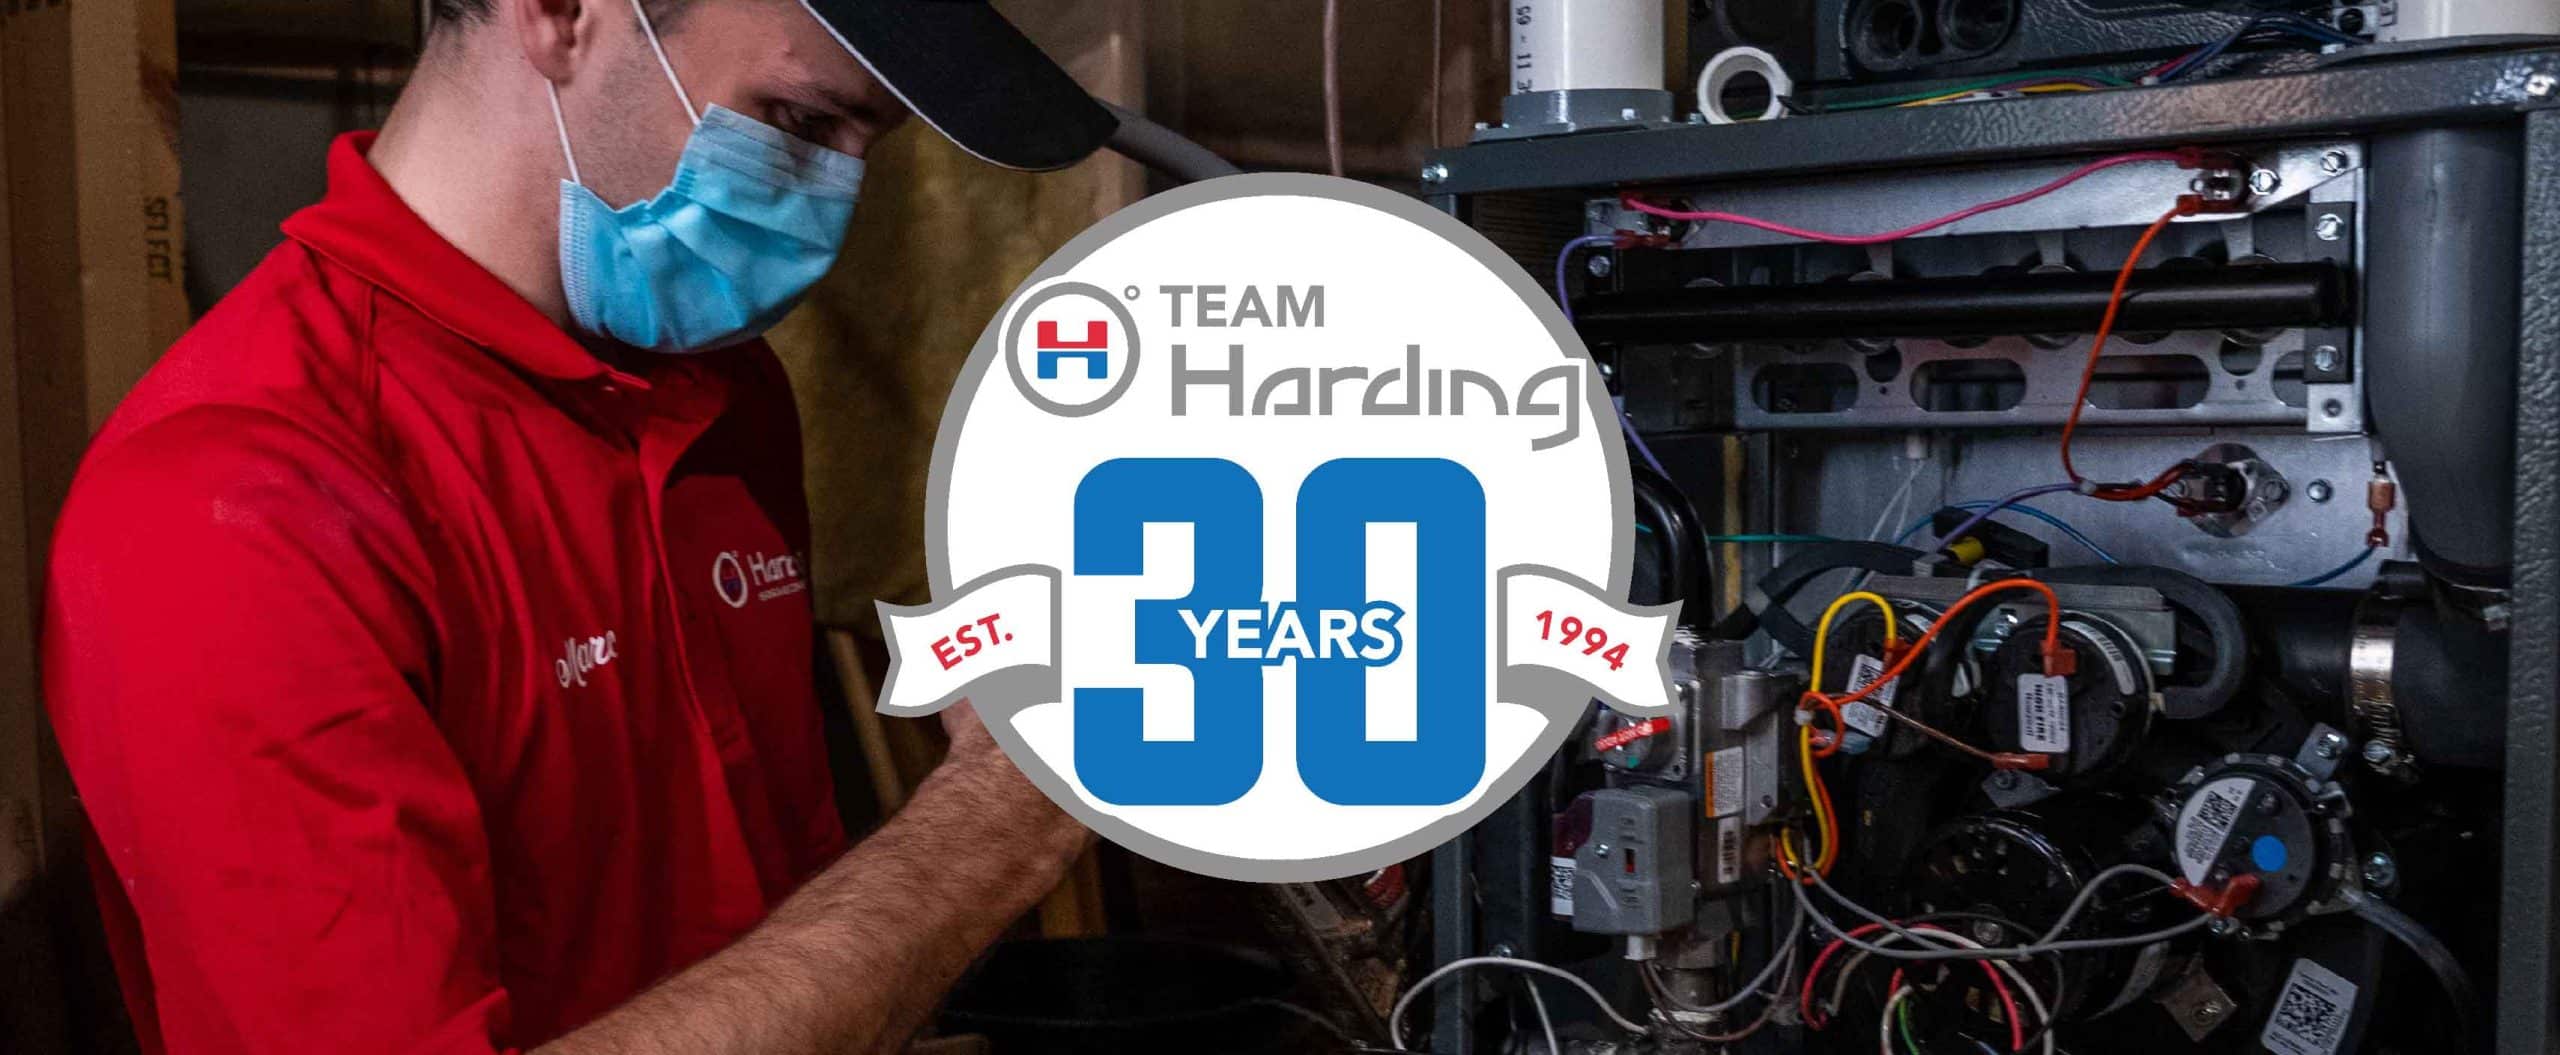 Team Harding 30